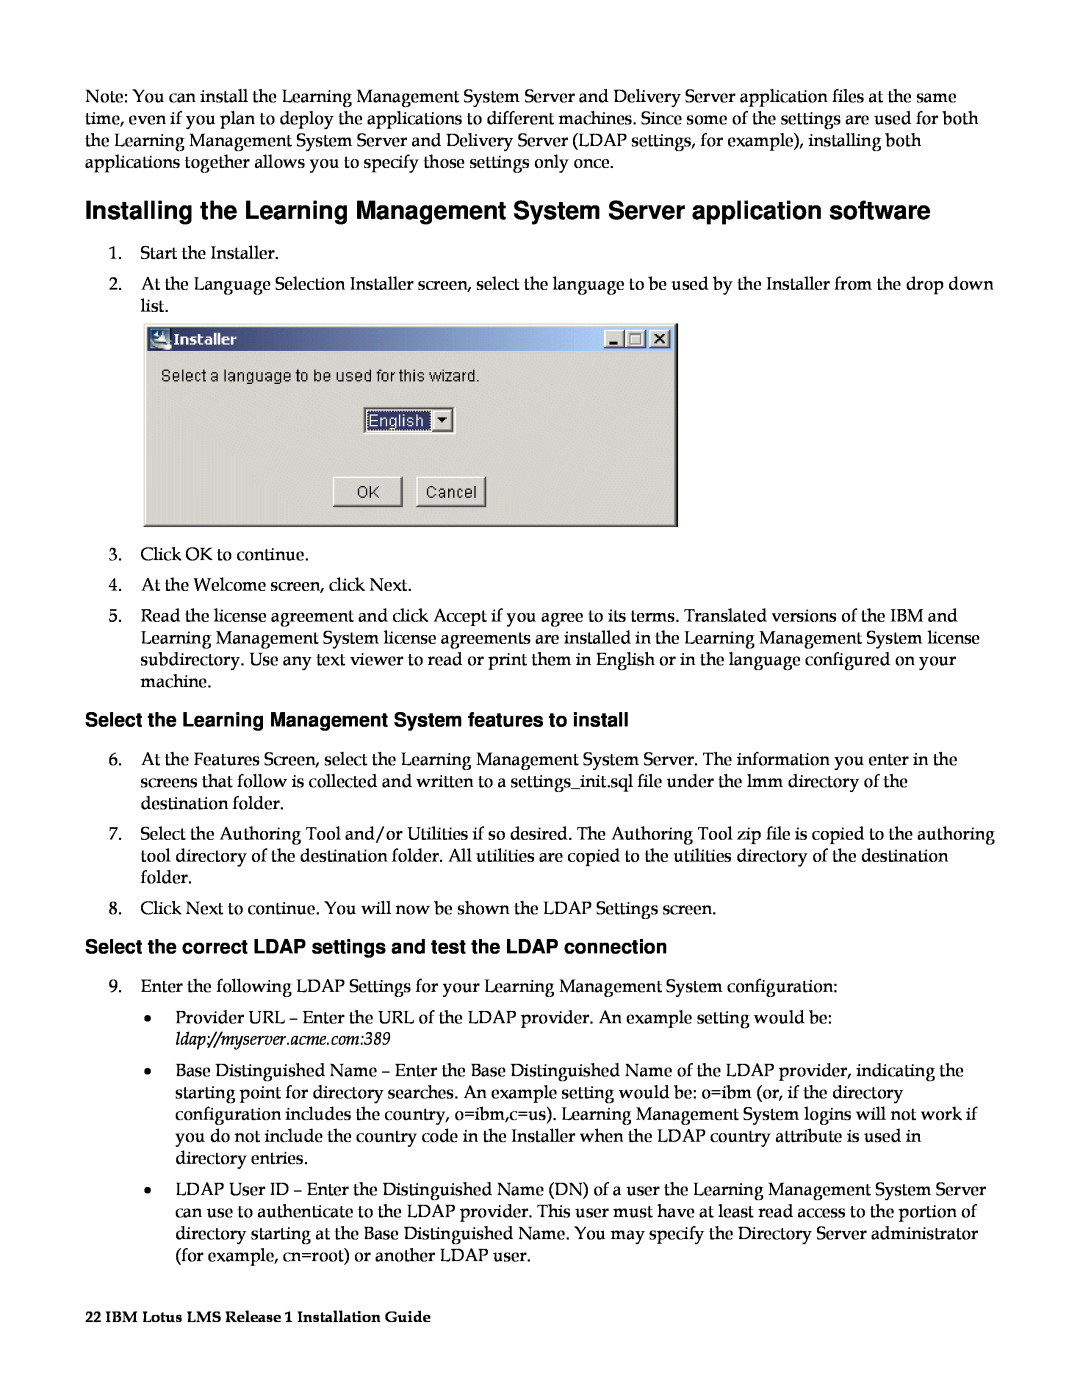 IBM G210-1784-00 manual Installing the Learning Management System Server application software 